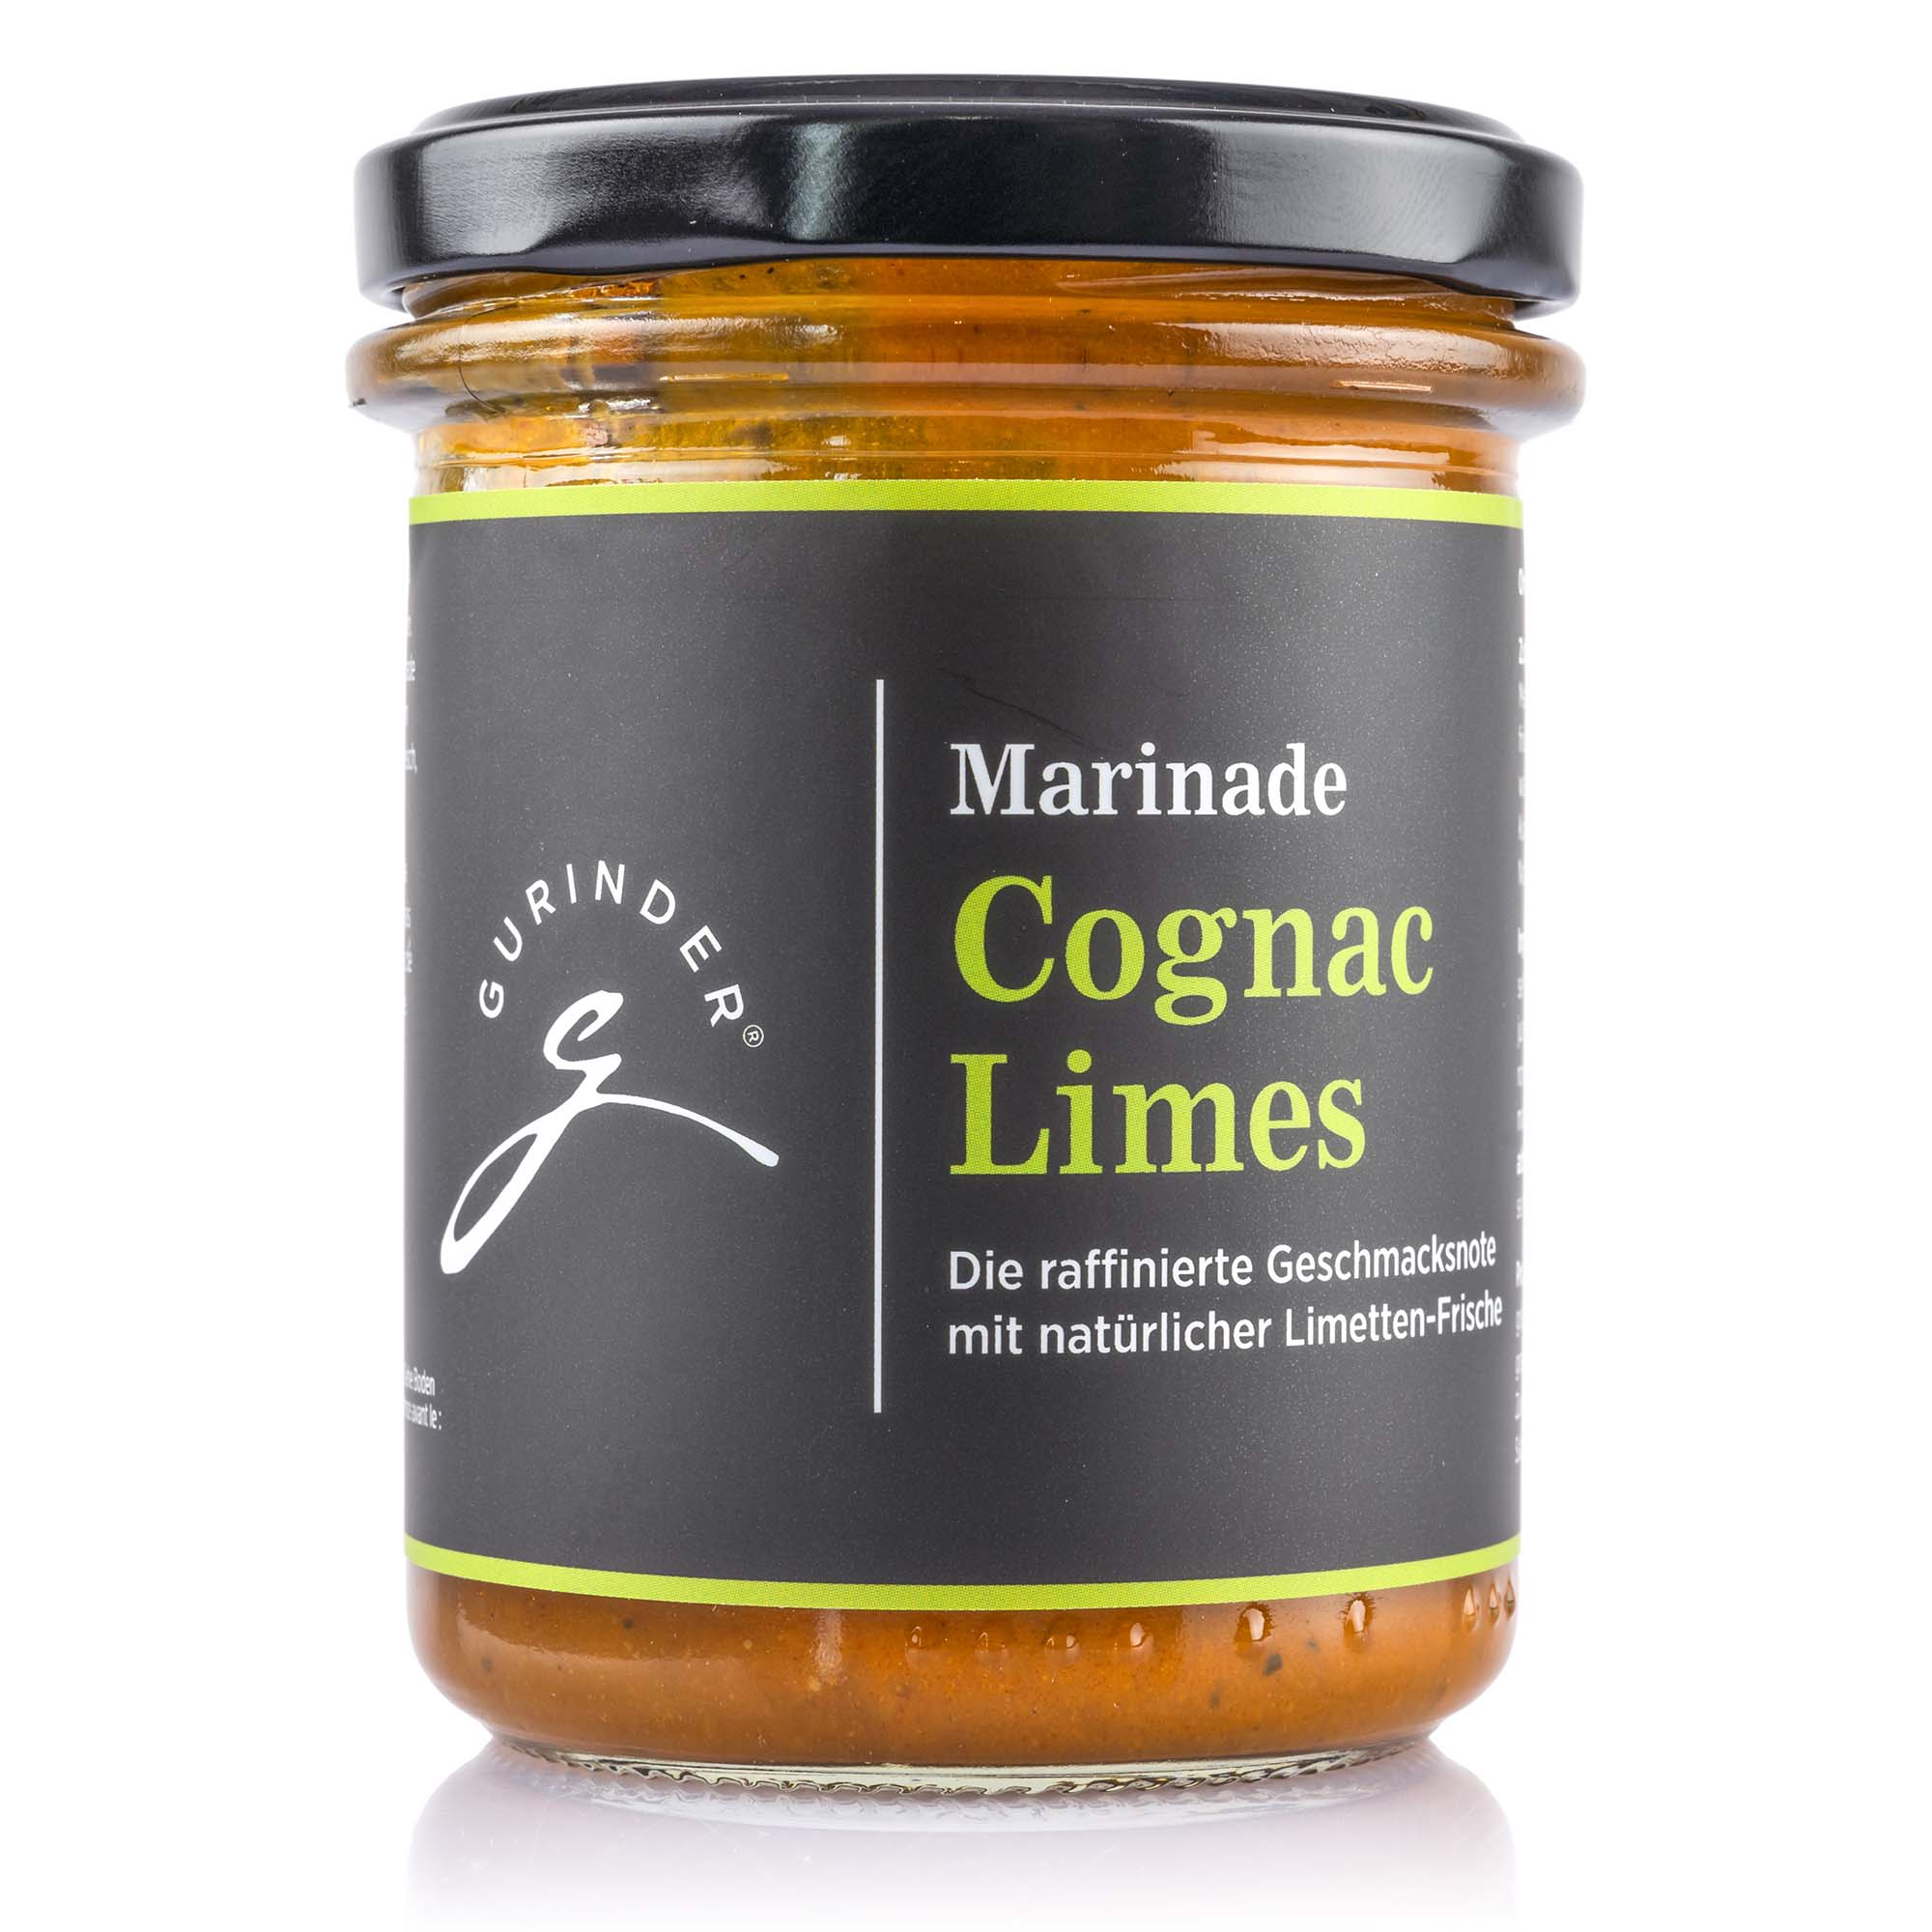 Cognac Limes Marinade, 200g